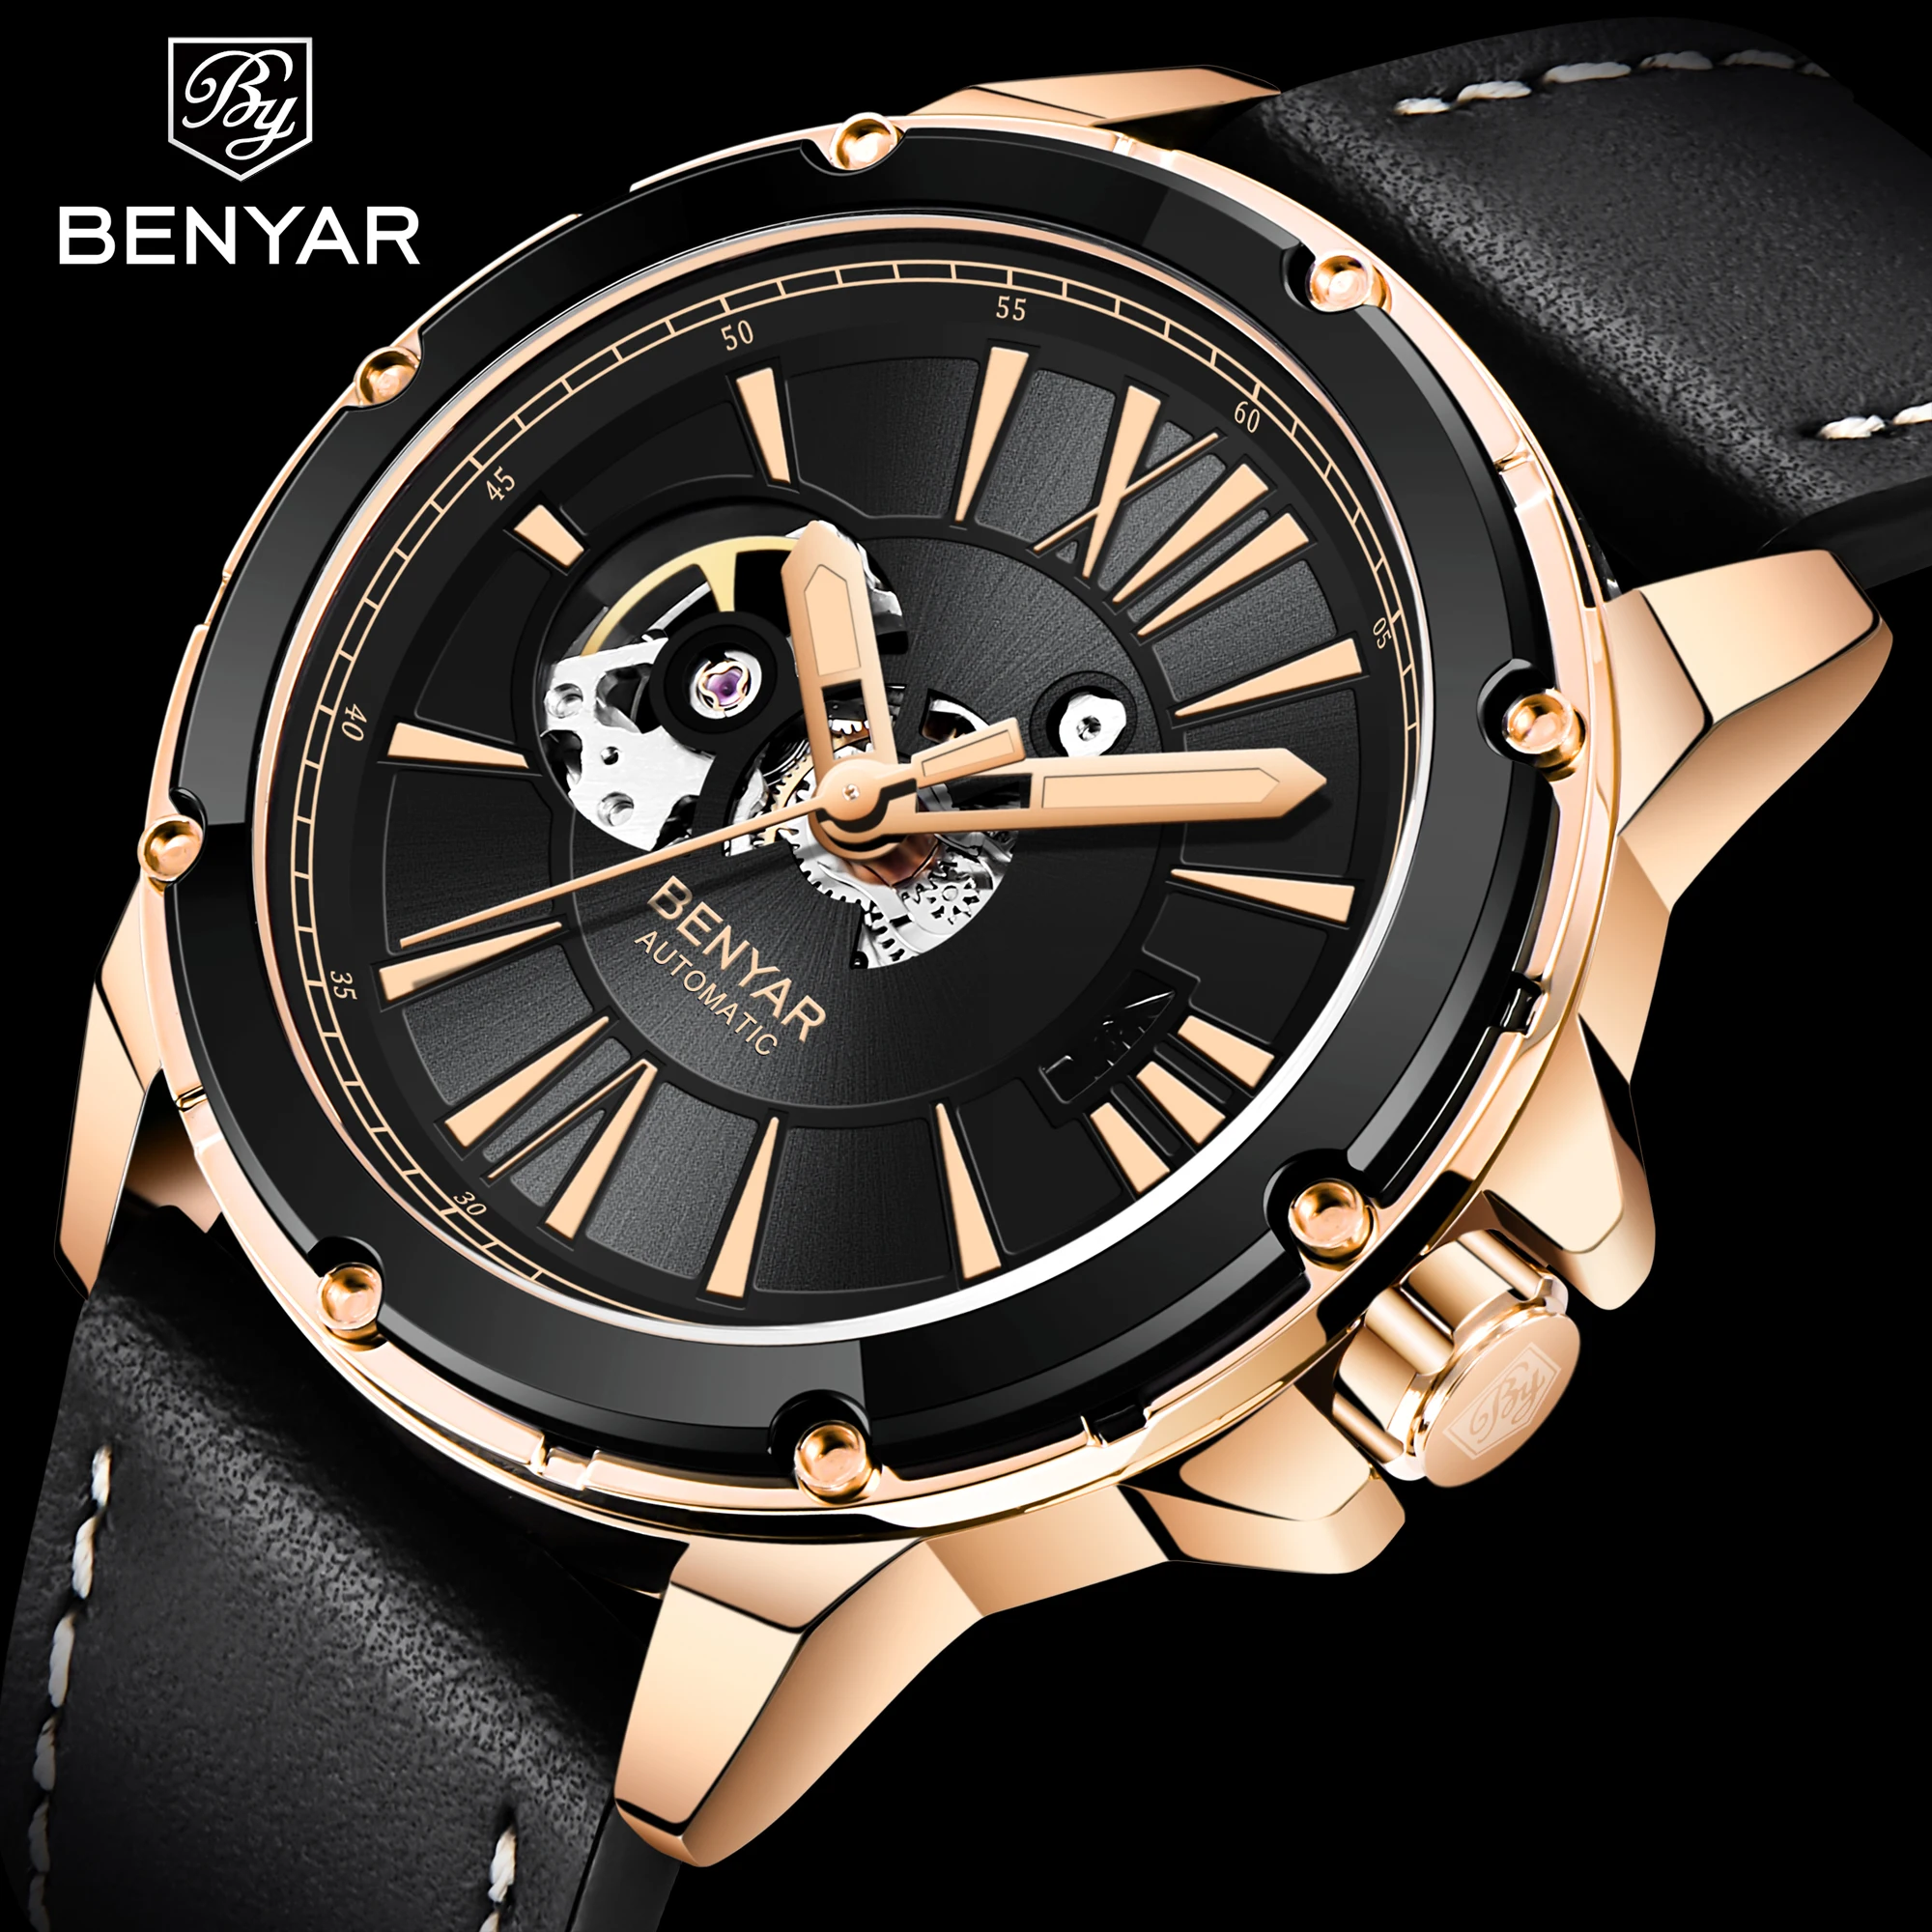 BENYAR Automatic Mechanical Watch Top Luxury Brand Watches Men's Business Fashion Leather Strap Waterproof Wristwatches Reloj